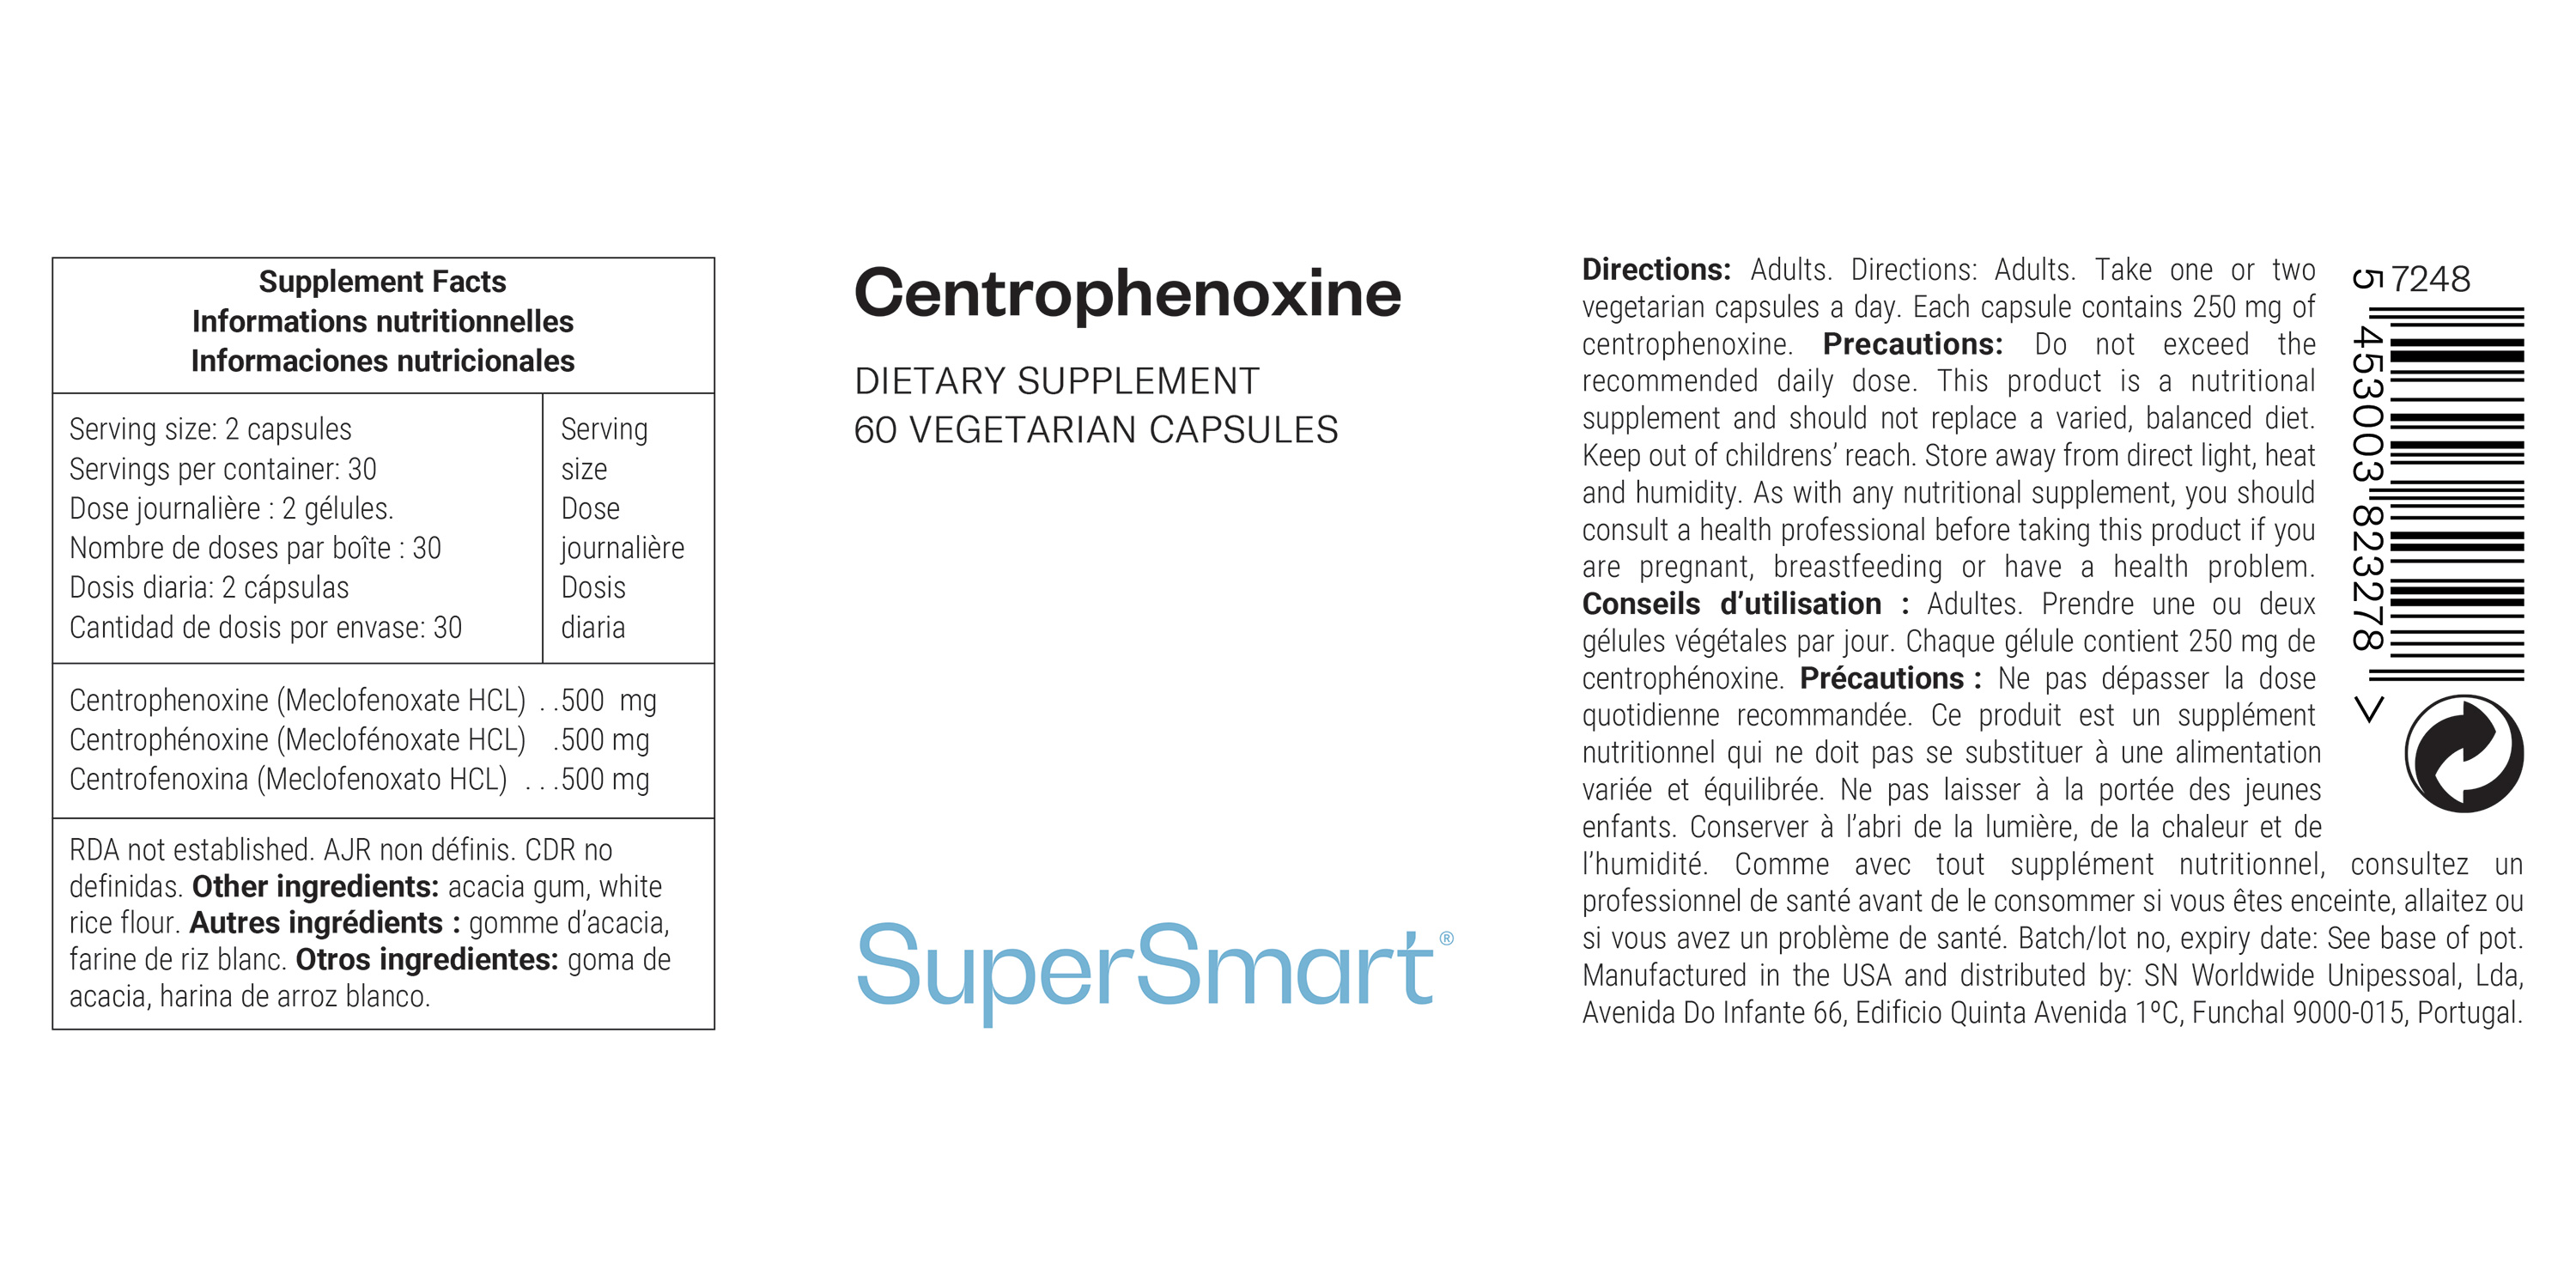 Centrophenoxine antioxidant dietary supplement, contributes to brain function